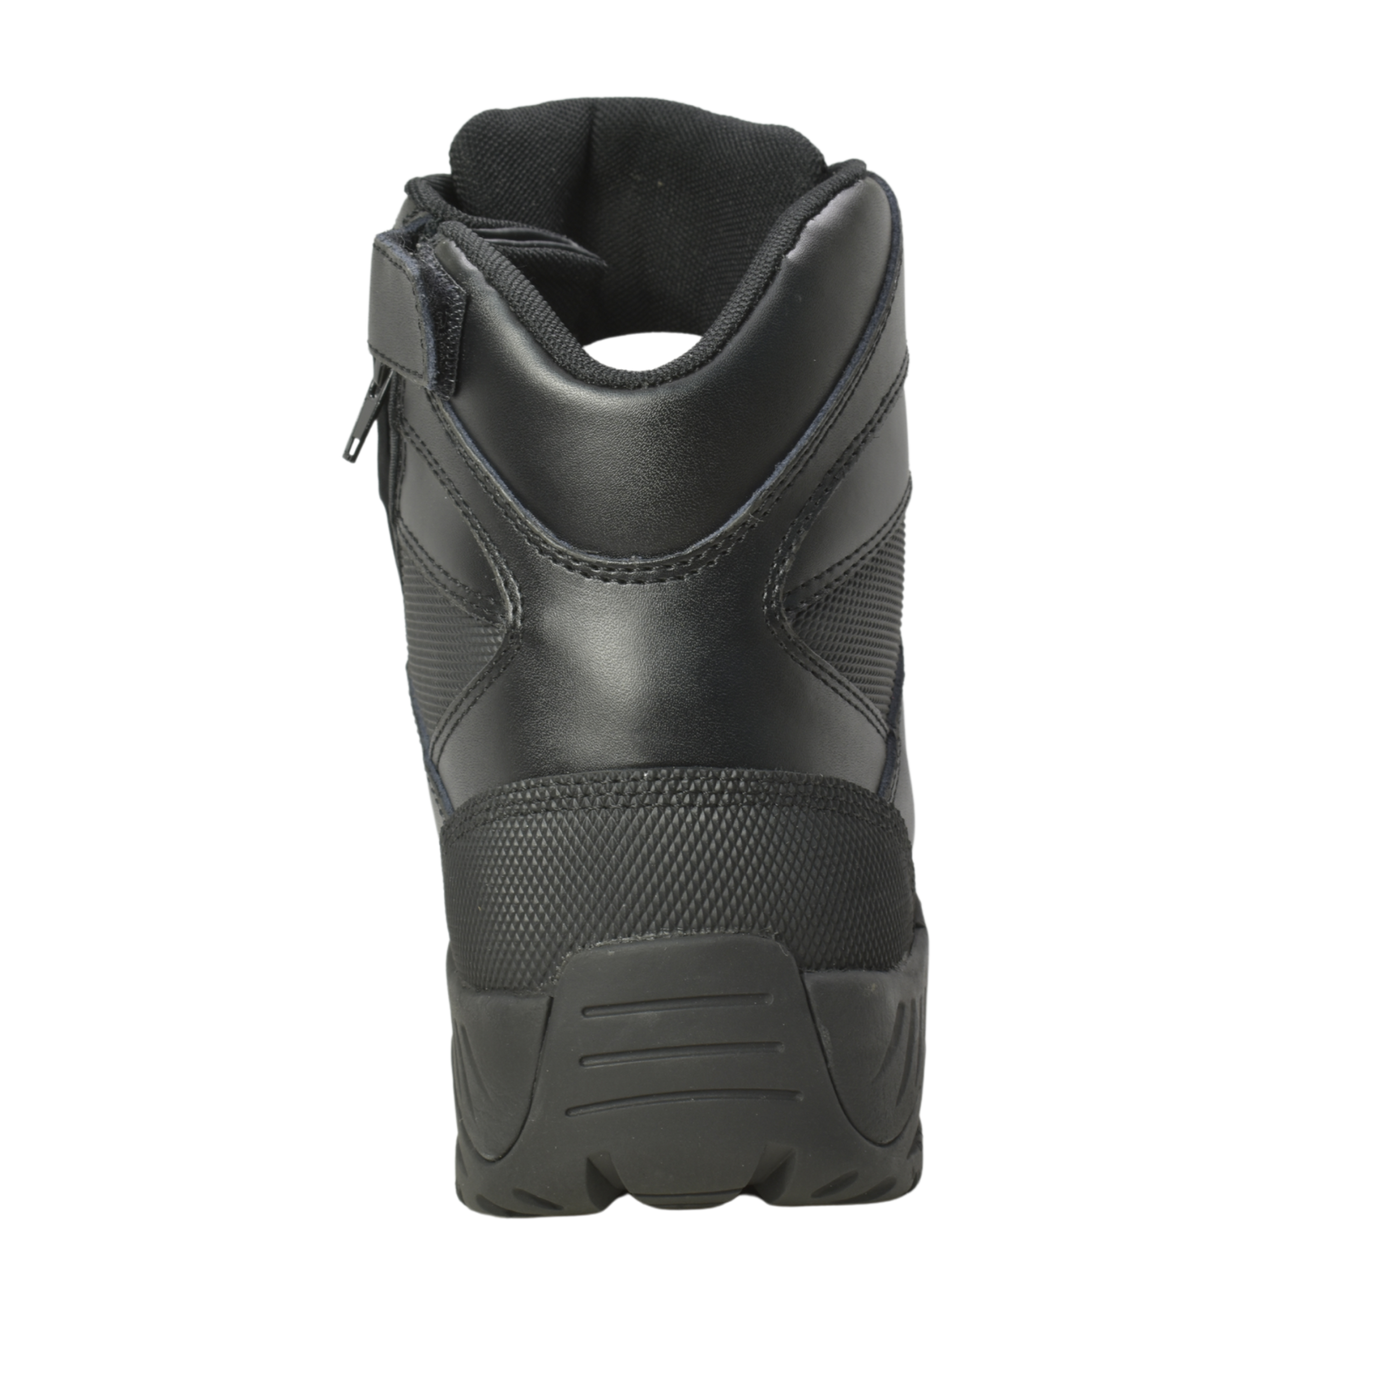 Urban PDU - Men's 6" Black Tactical Boot w/ Waterproof Membrane & Composite Toe  - KT1002